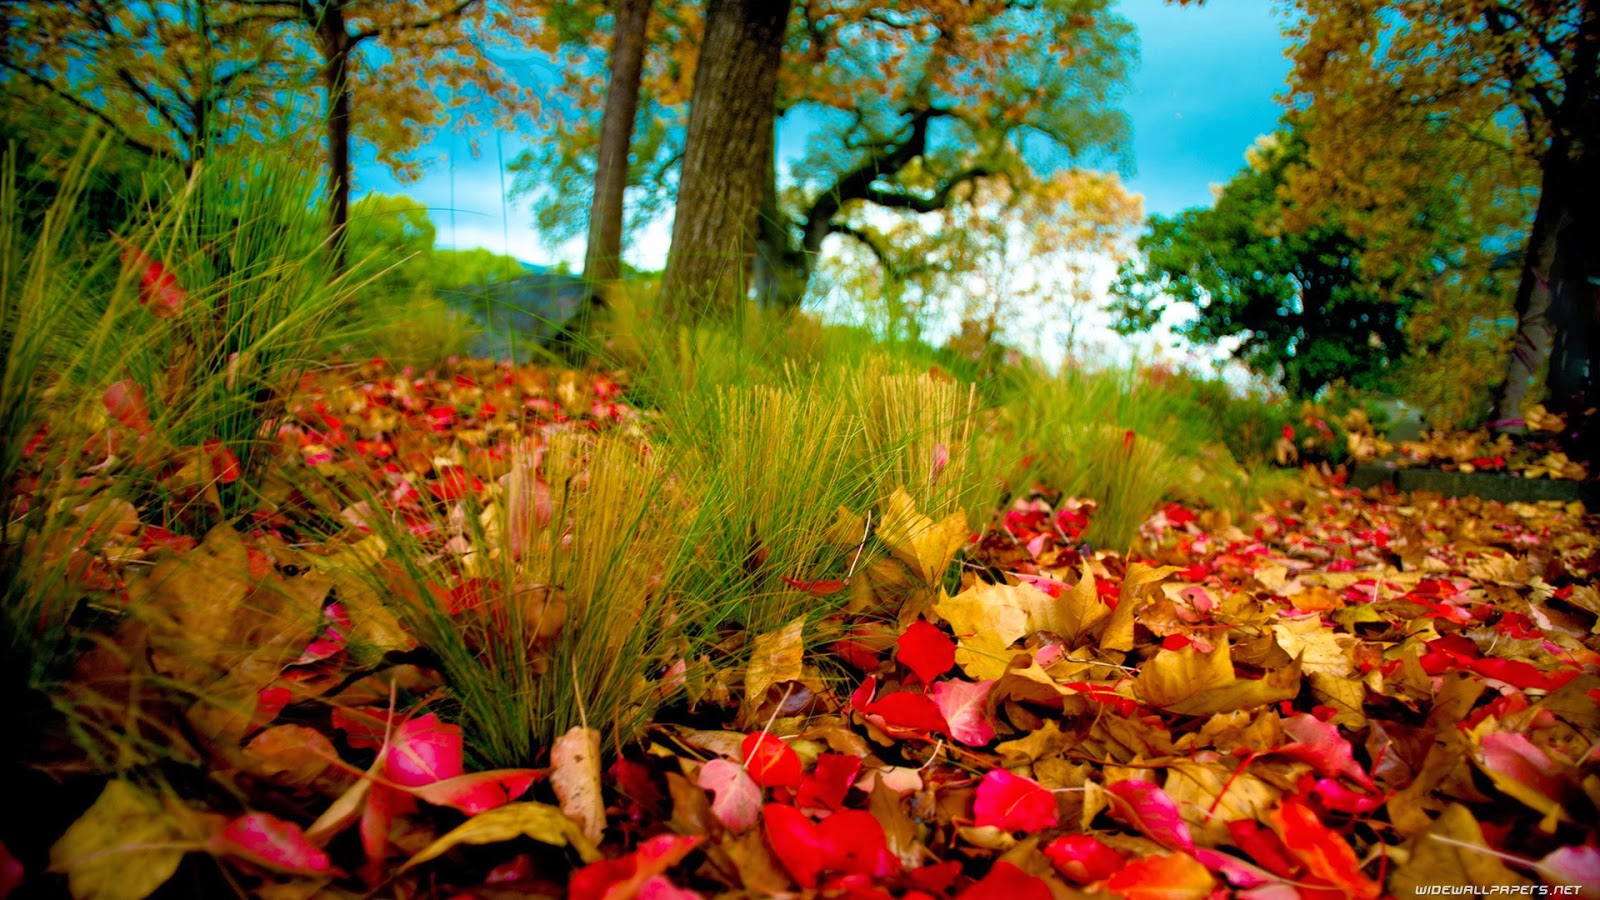 HD Wallpaper 1080p Nature Autumn Nice Pics Gallery